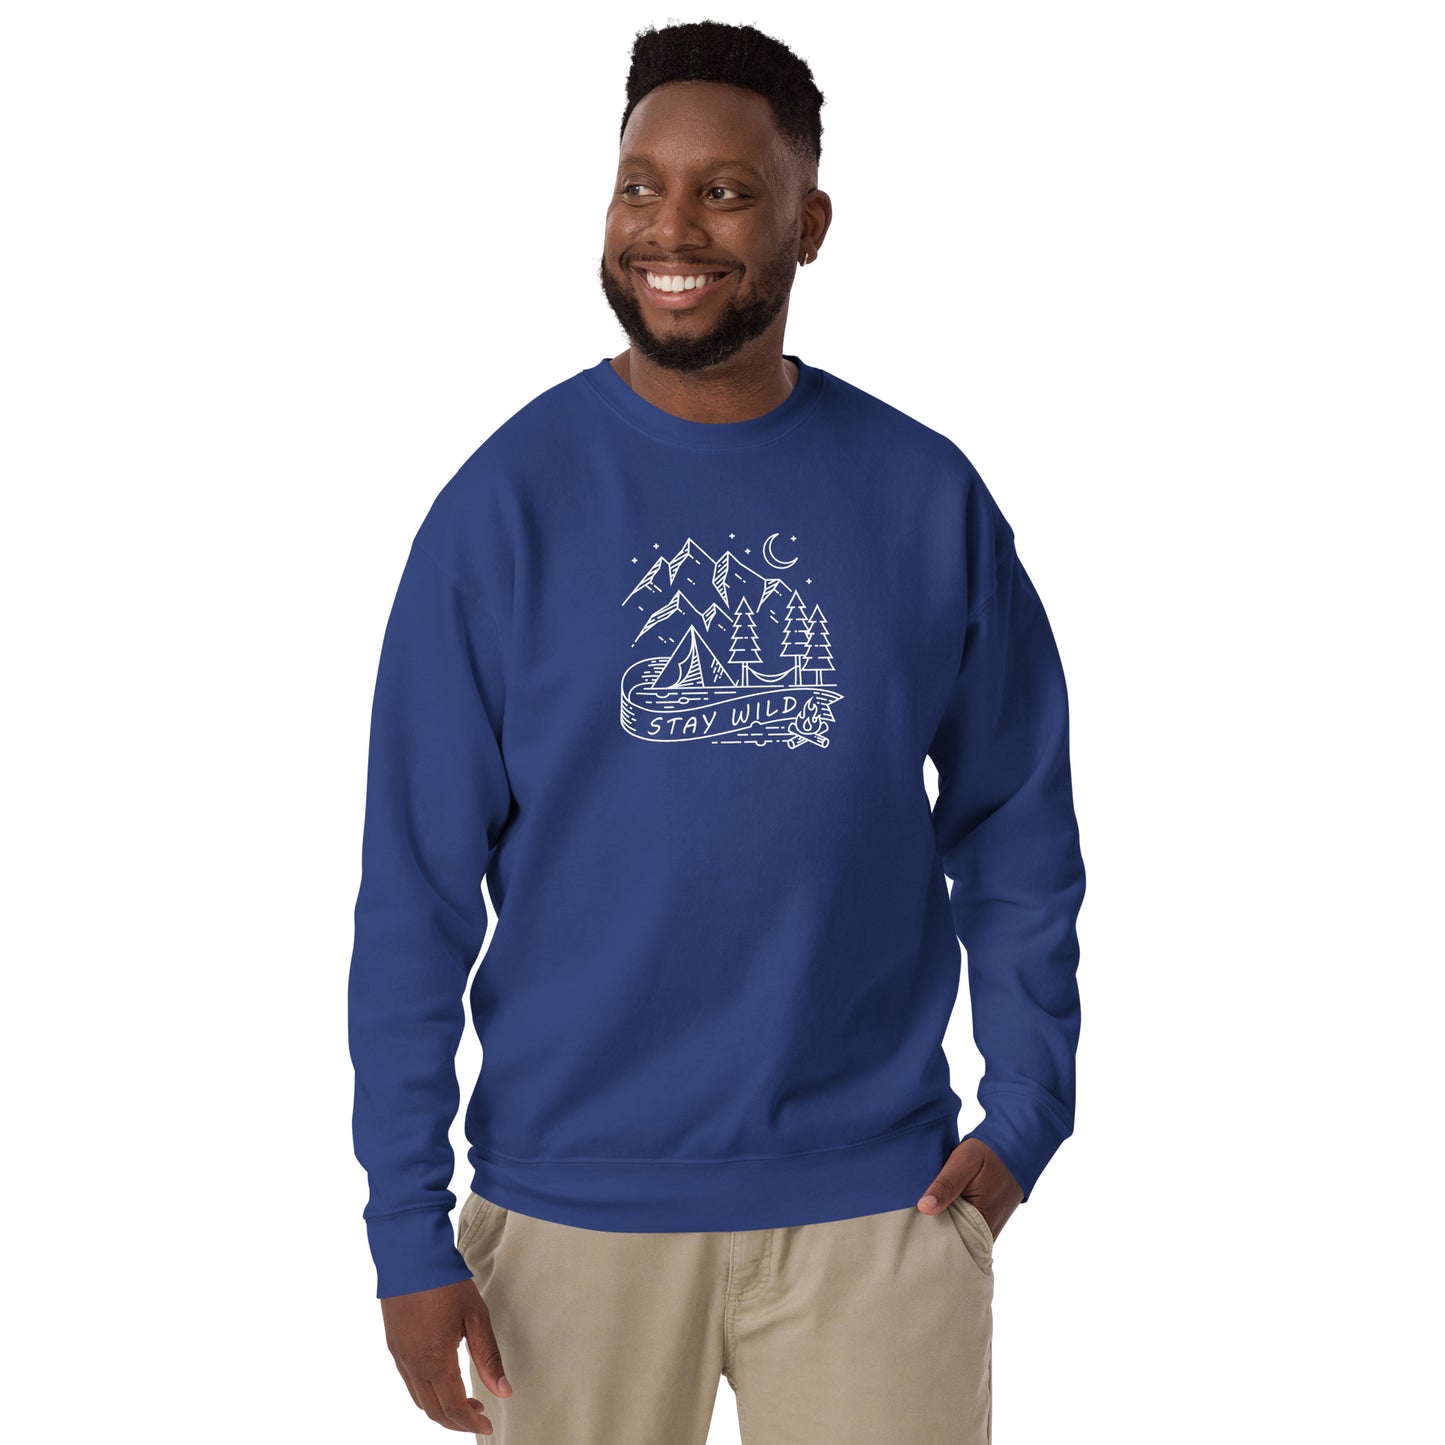 Stay Wild Unisex Premium Sweatshirt